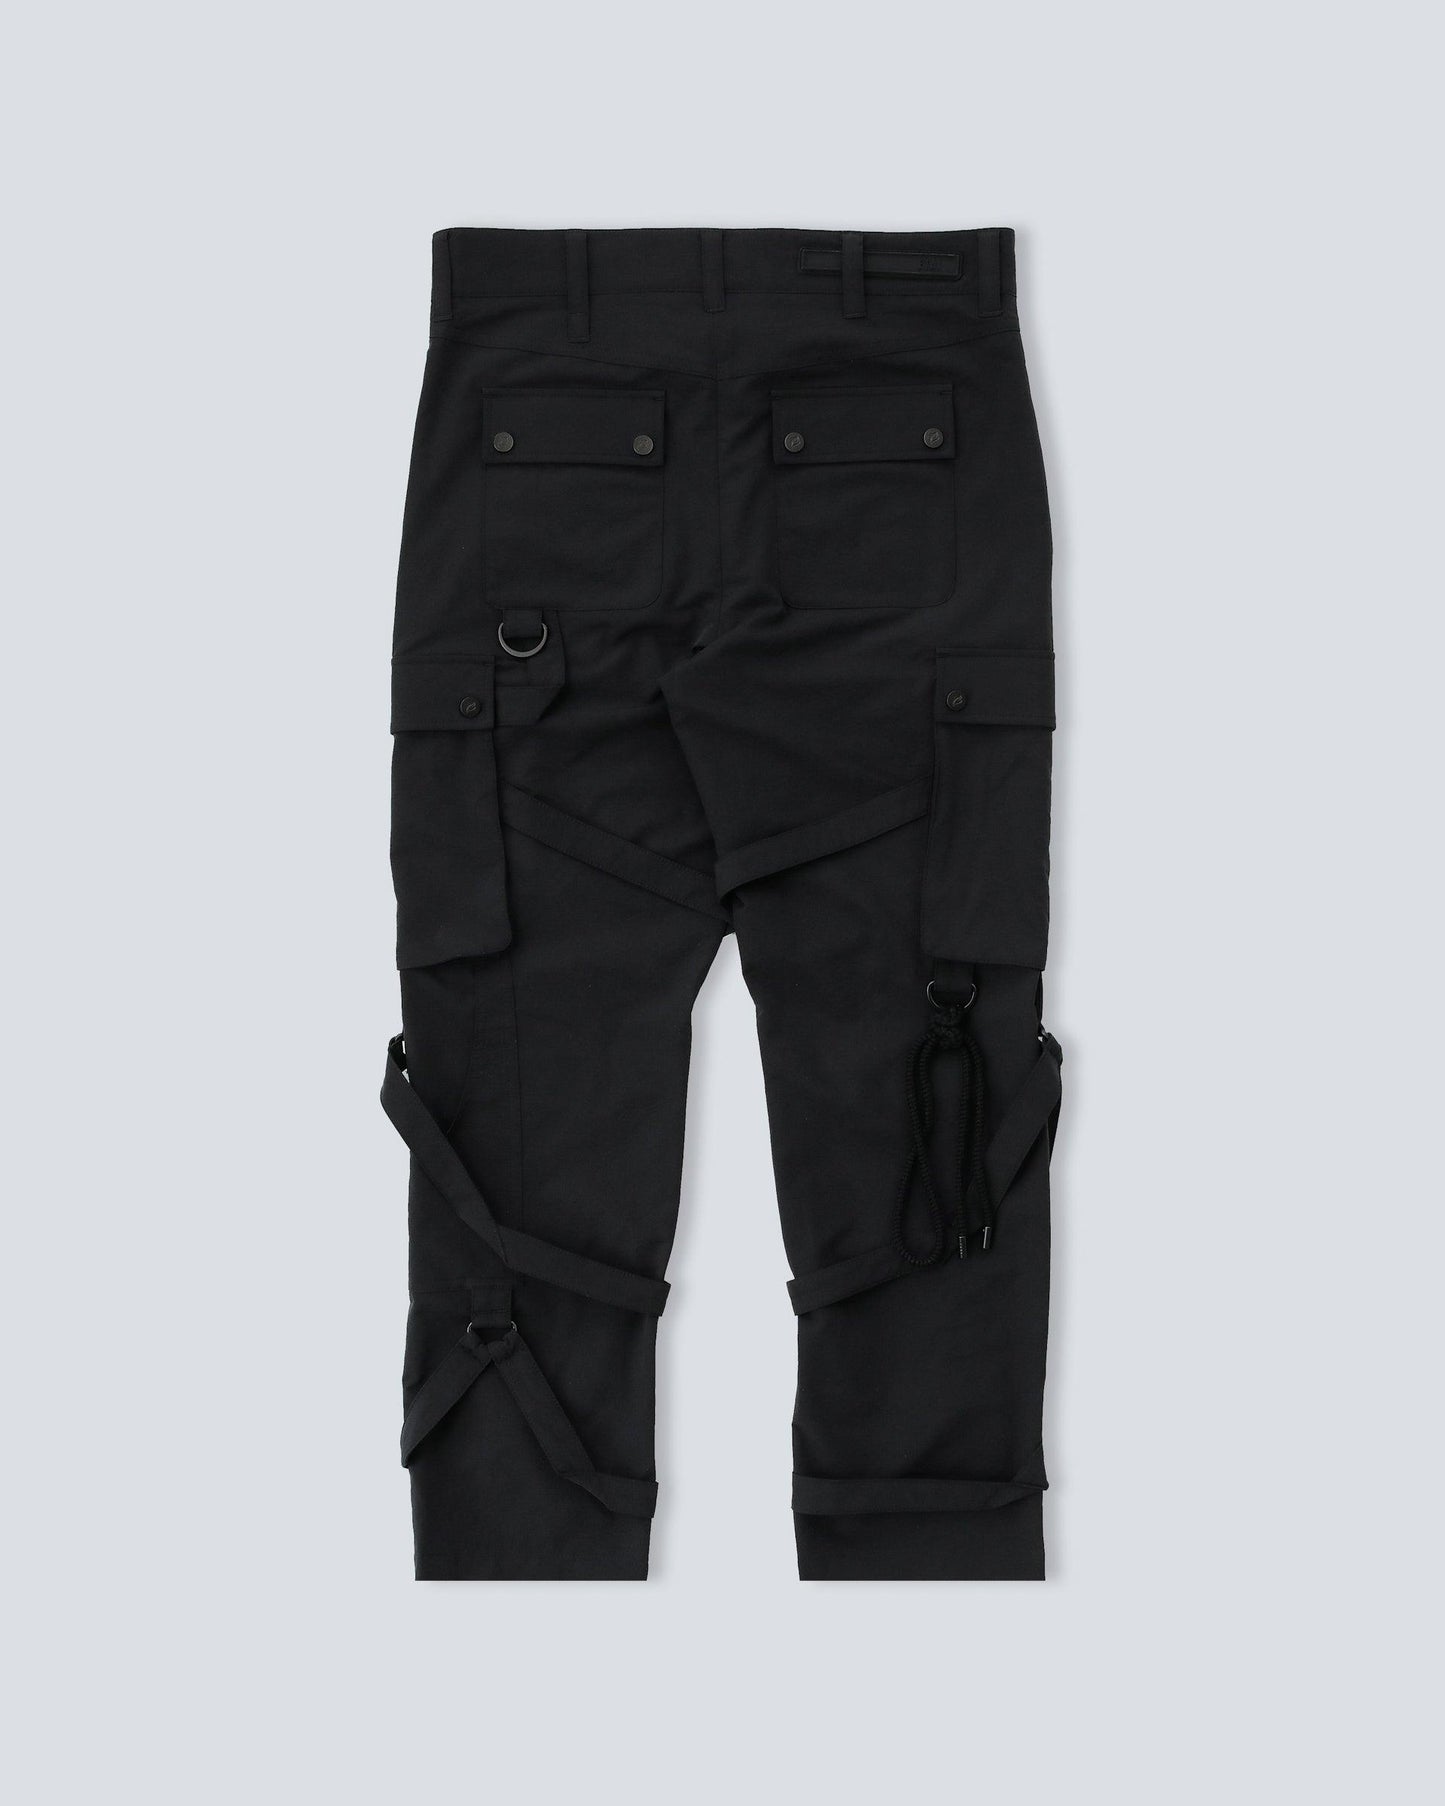 Multi-Strap Cargo Pants - Black - ETAI etaila.com